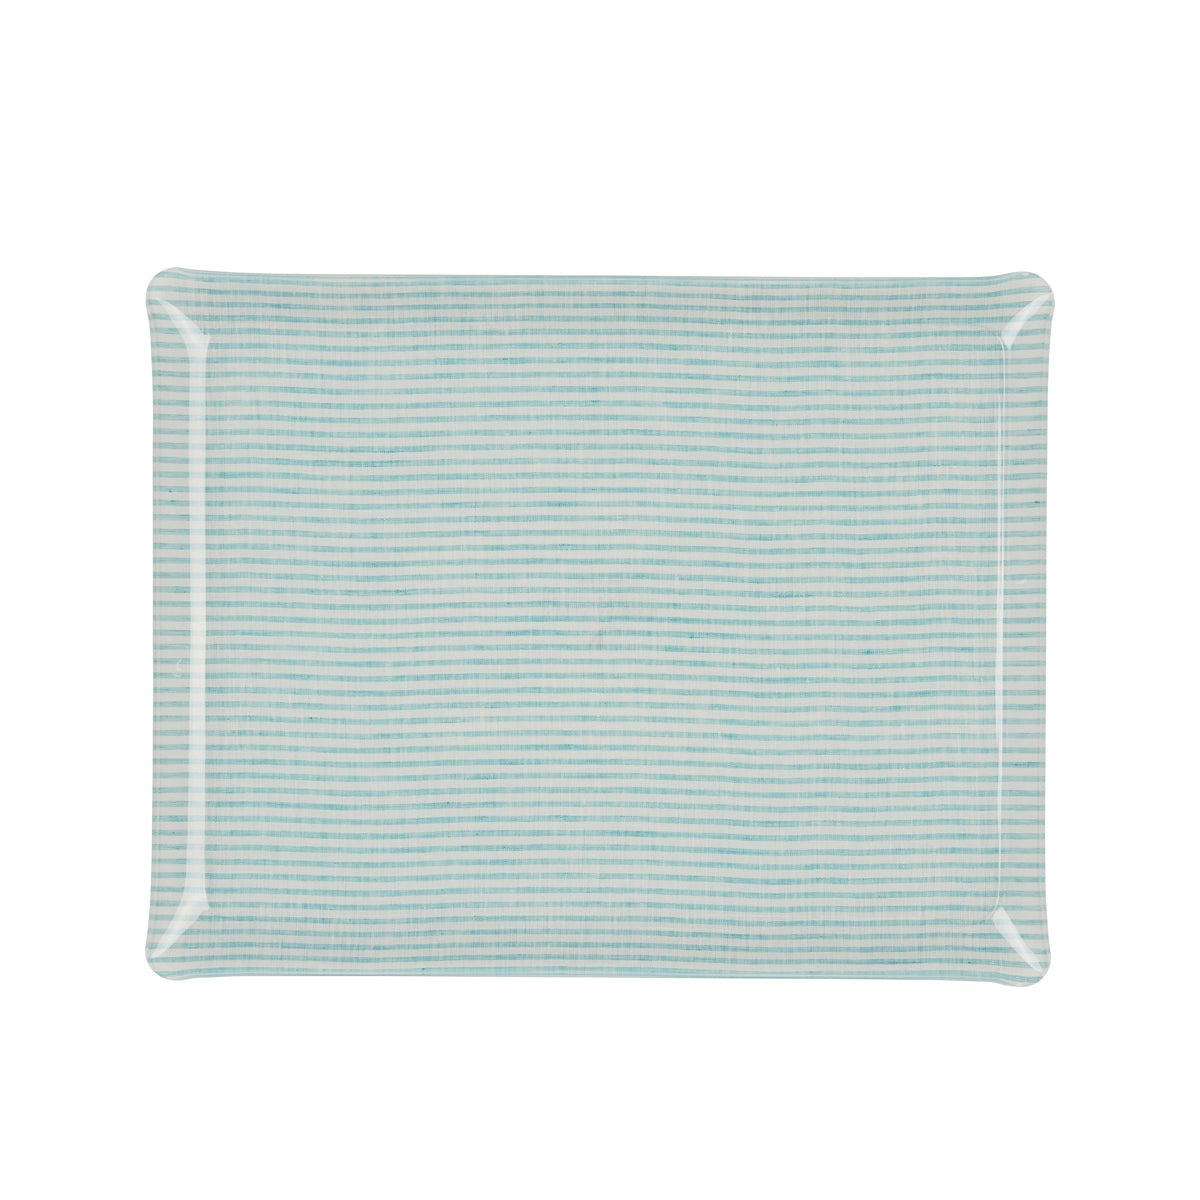 Nina Campbell Fabric Tray Large - Stripe Aqua and White